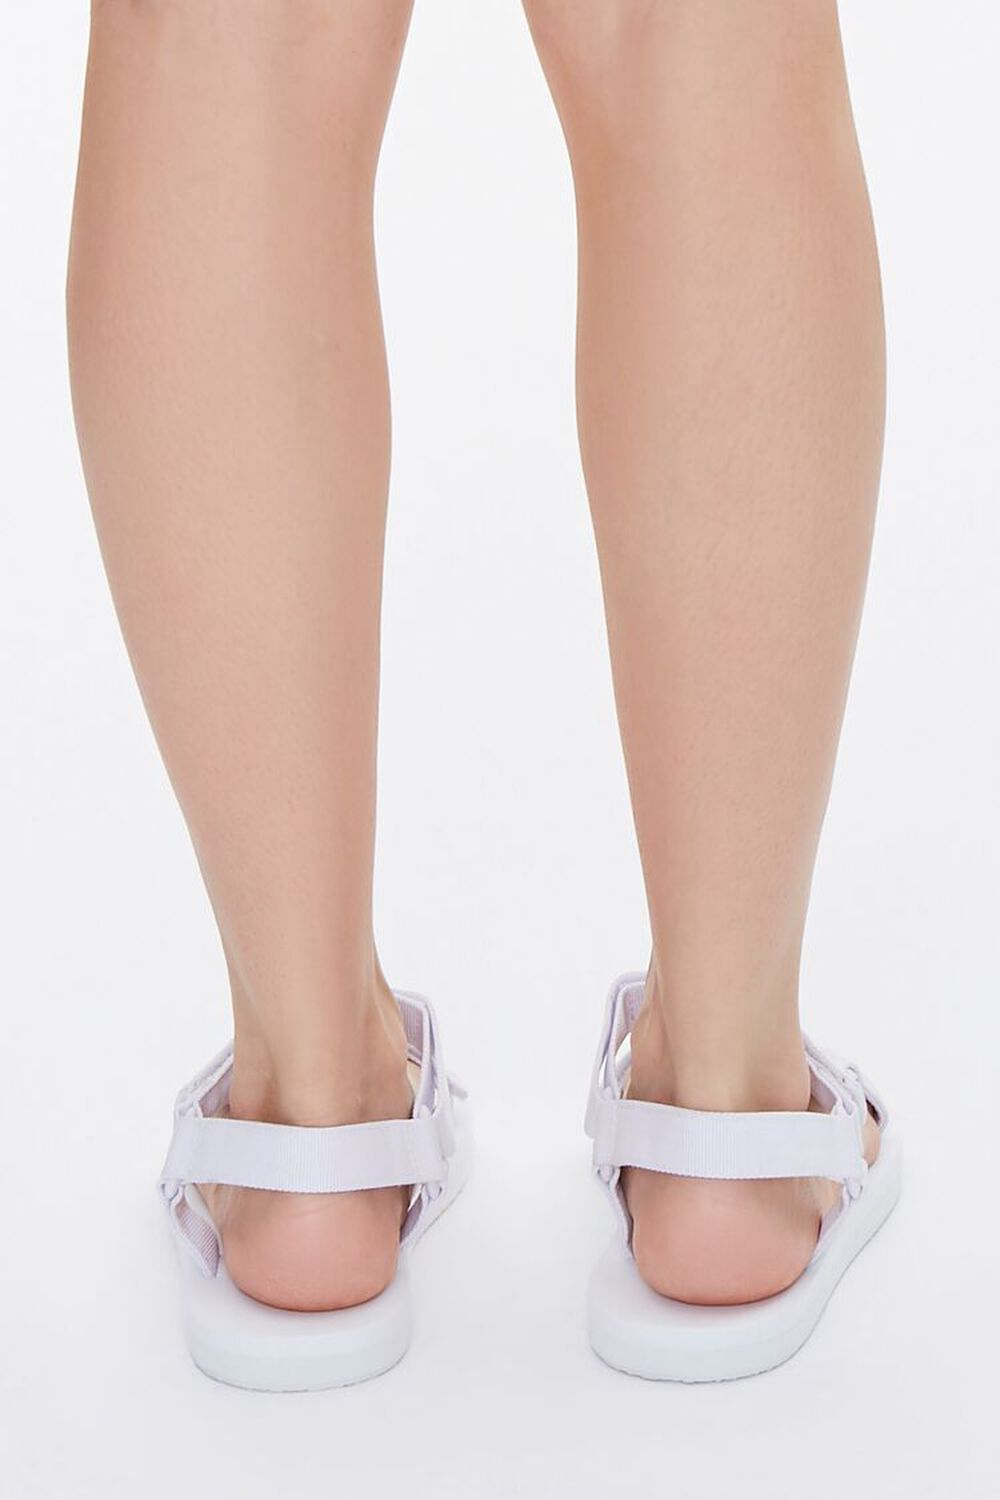 WHITE Strappy Flatform Sandals, image 3